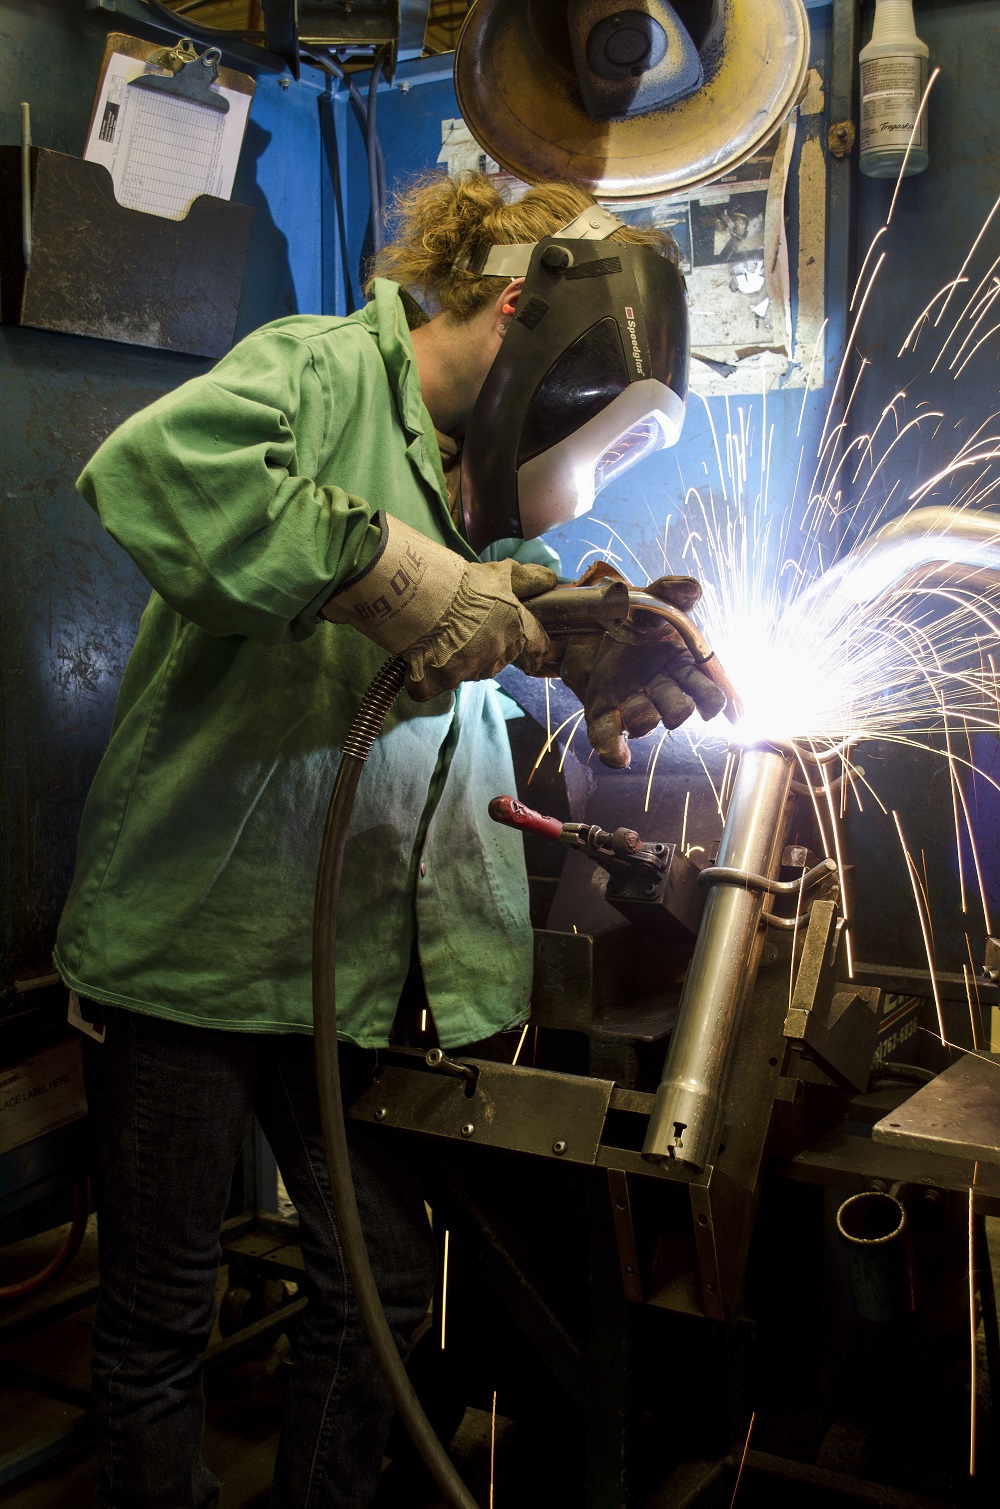 A KCC welding graduate welds on the job